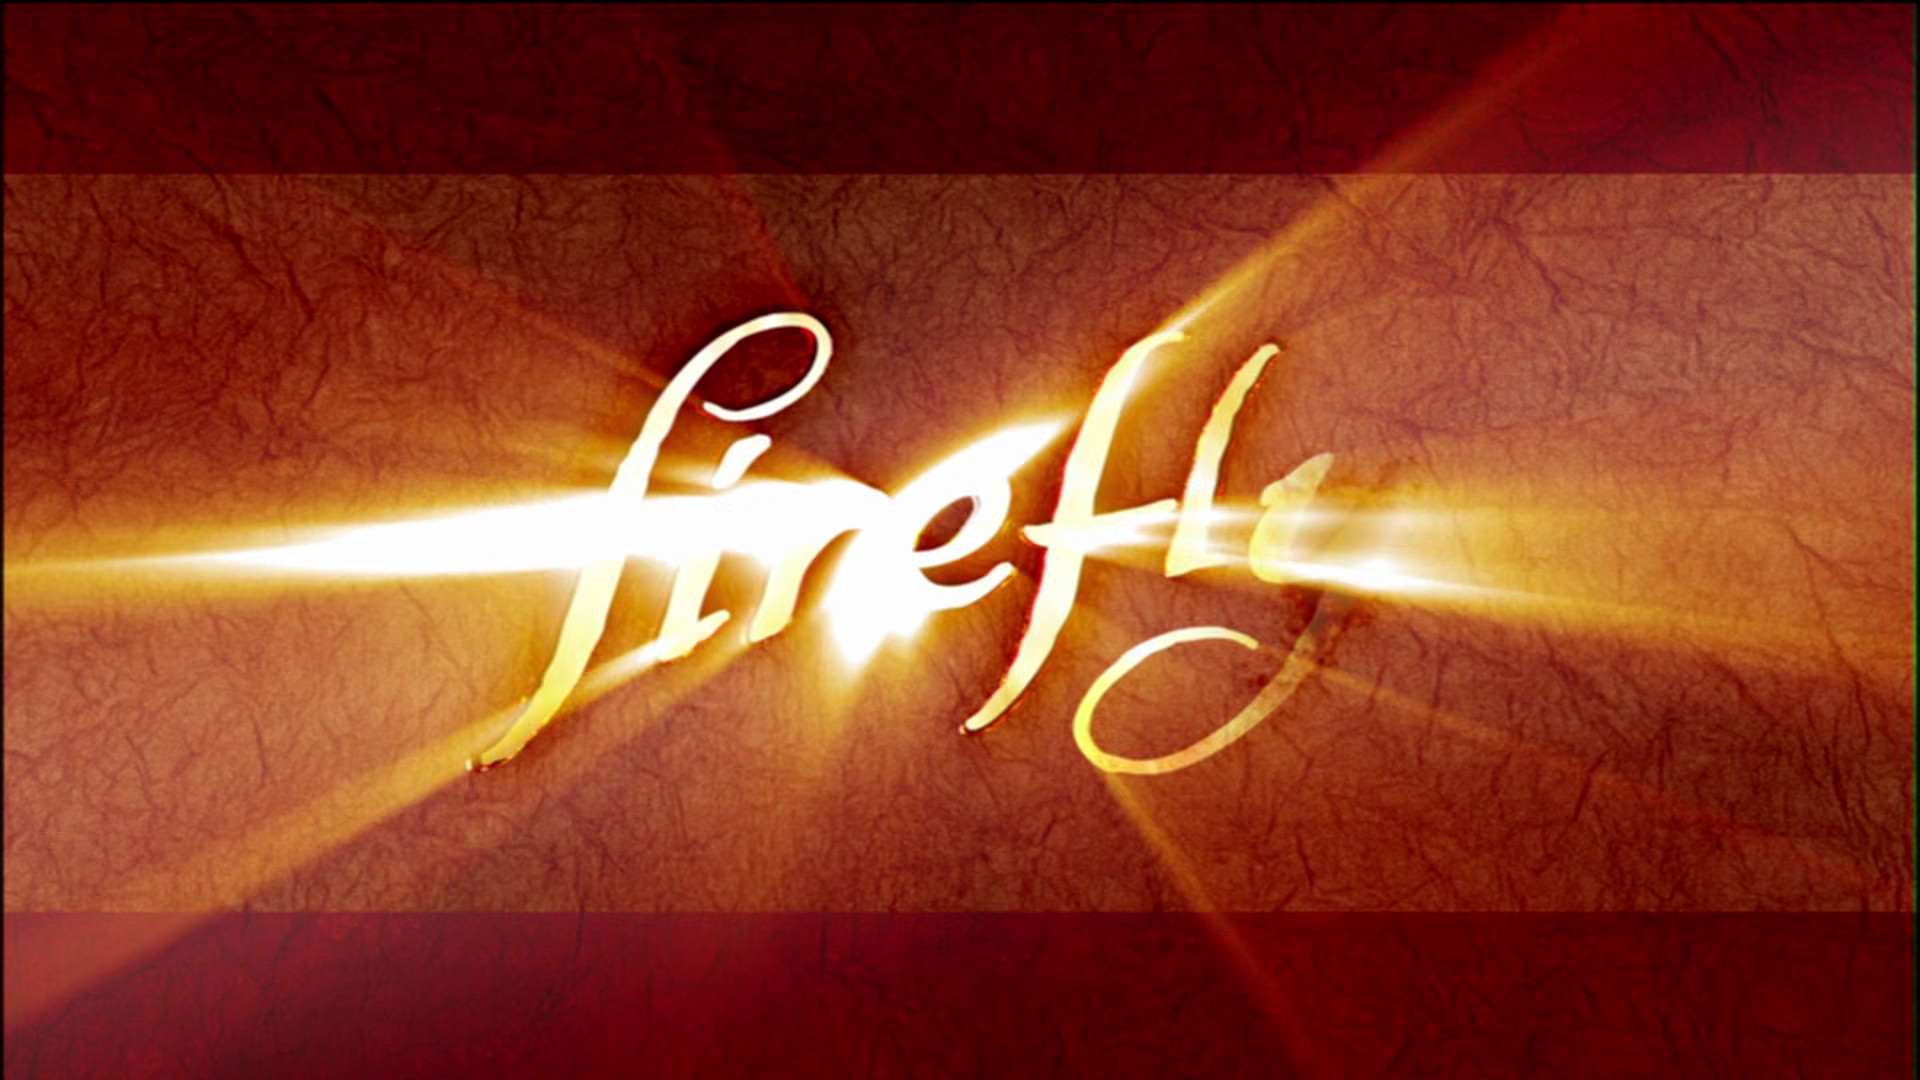 Firefly S01E10 War Stories 2002 1080p MKV BluRay x265 AAC Web DL 1 7GB